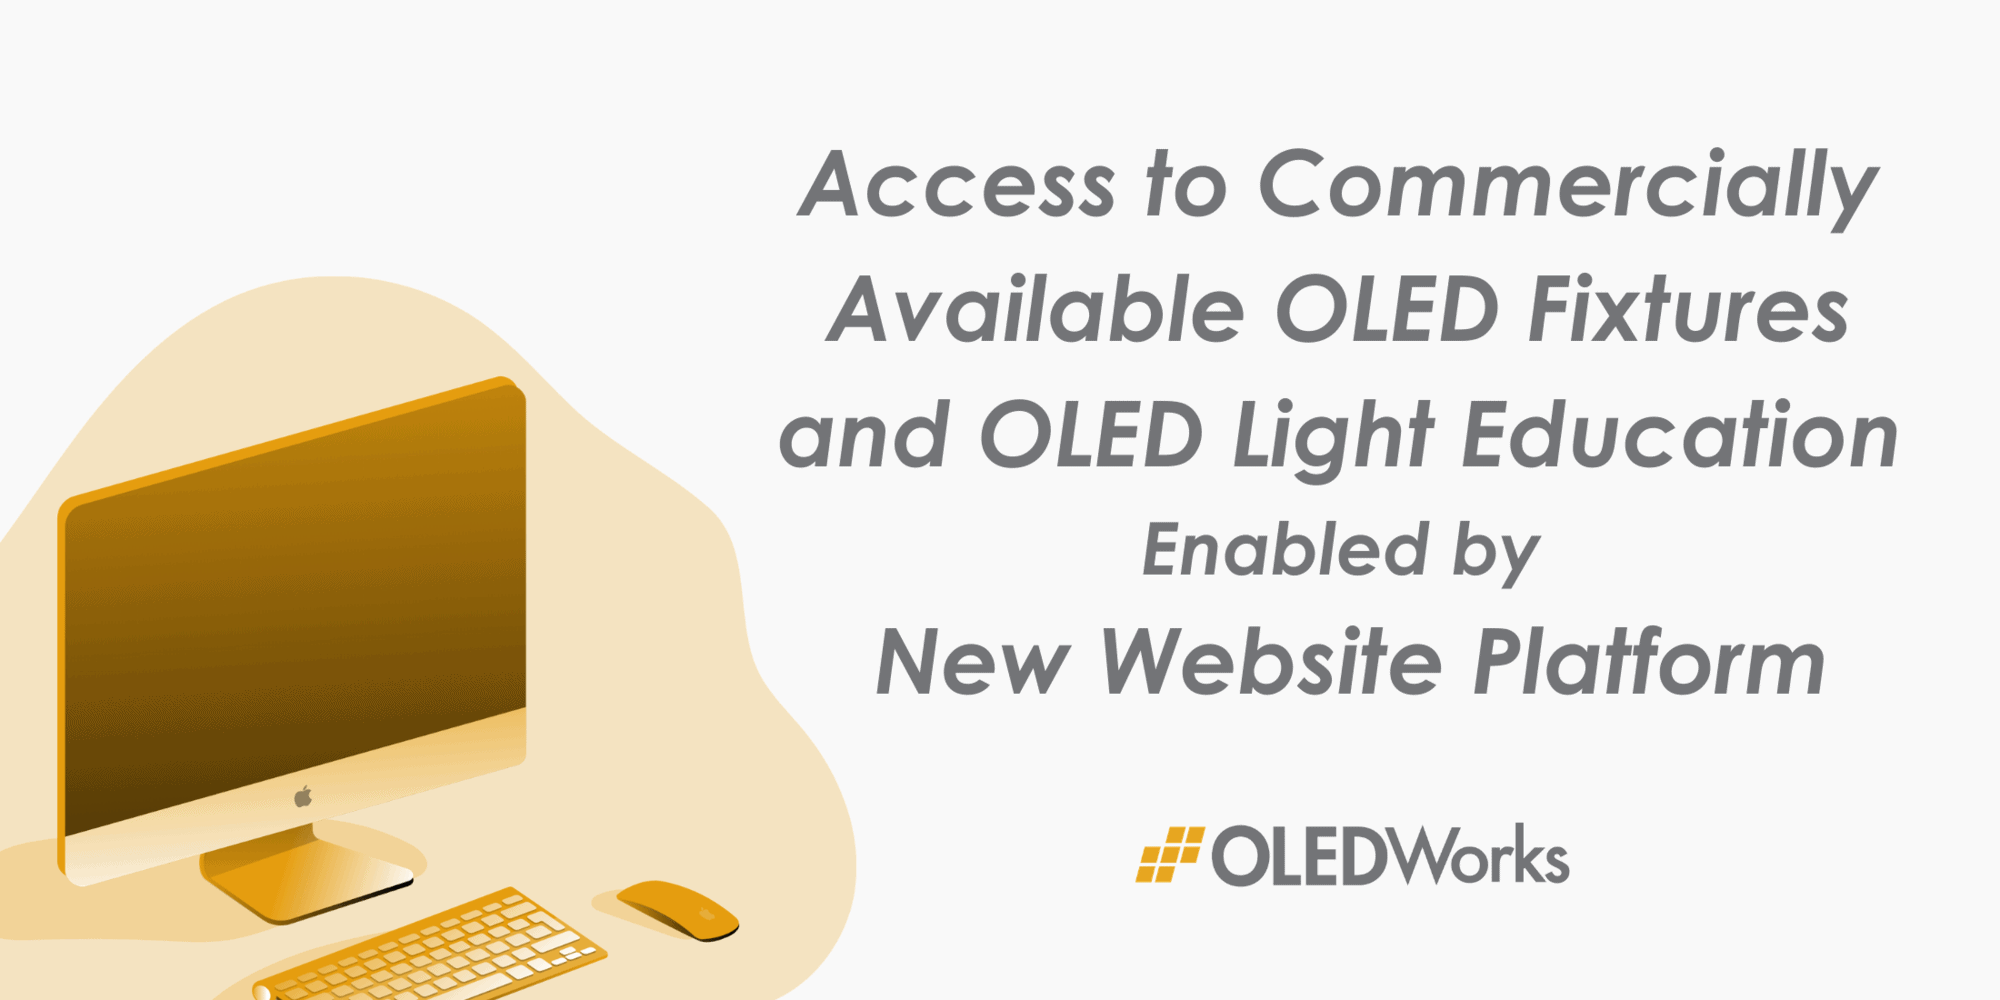 OLEDWorks Expands OLED Light Education with New Website